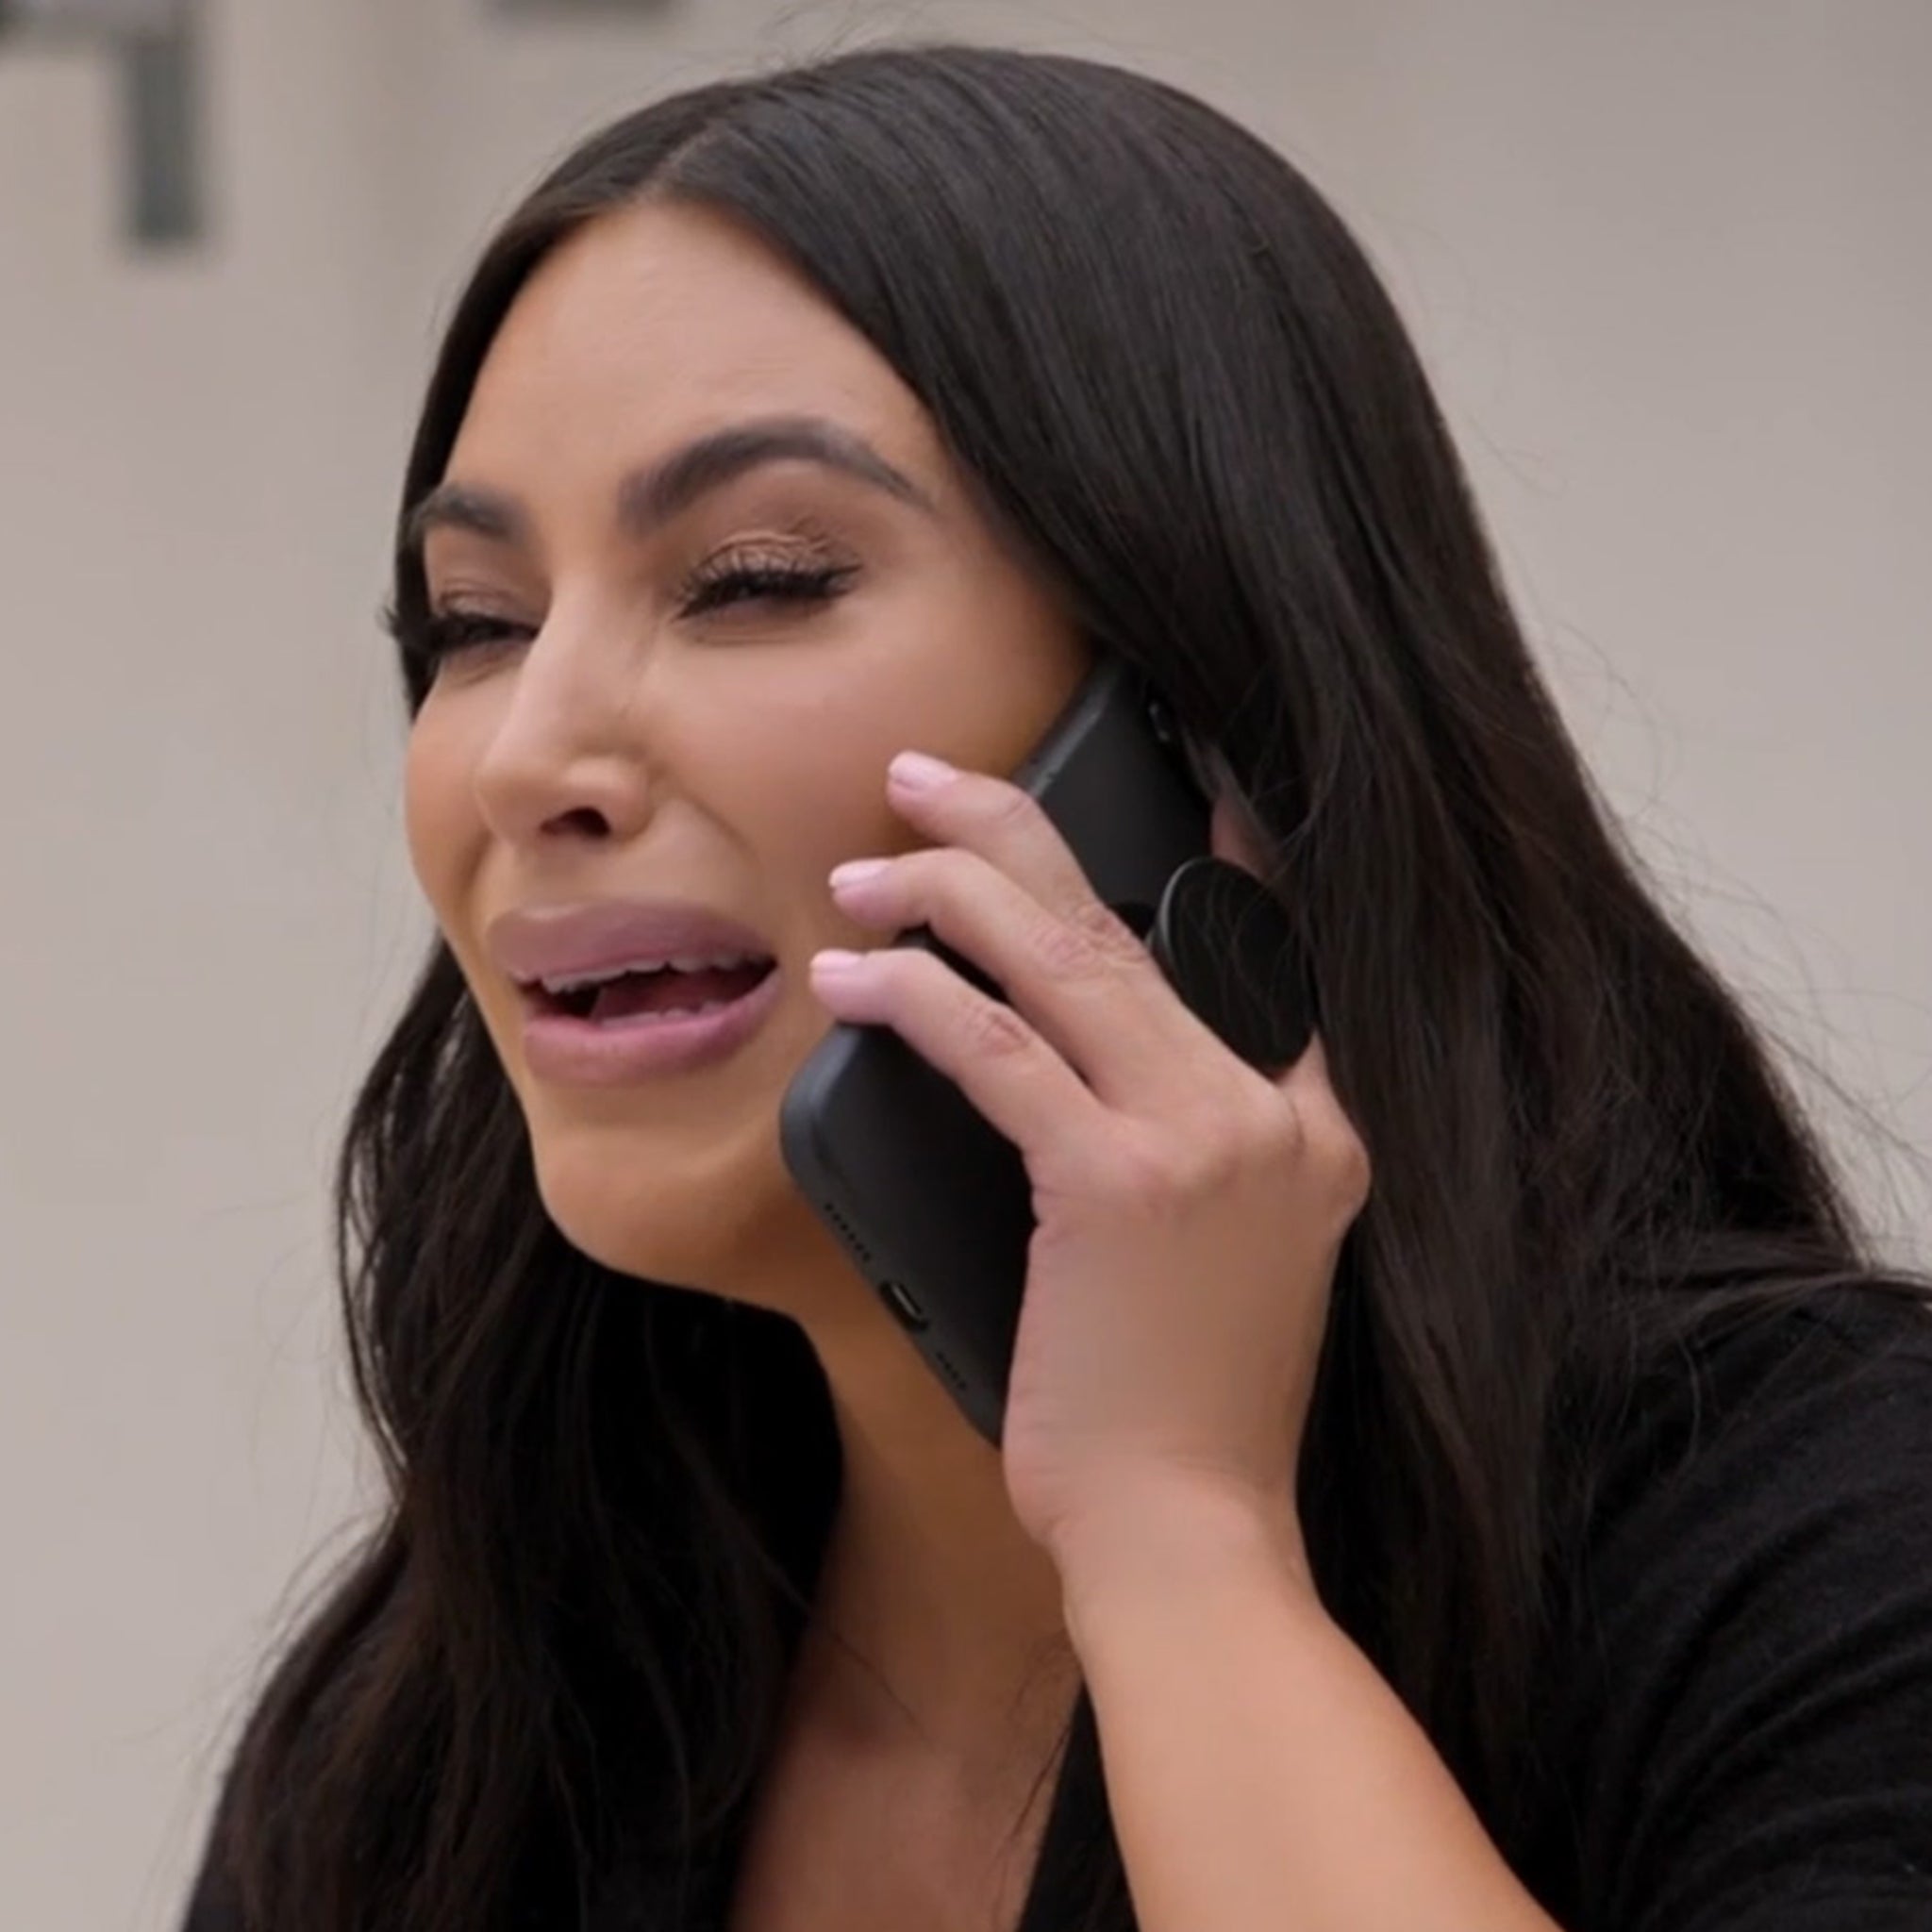 Kim kardashian full sextape free